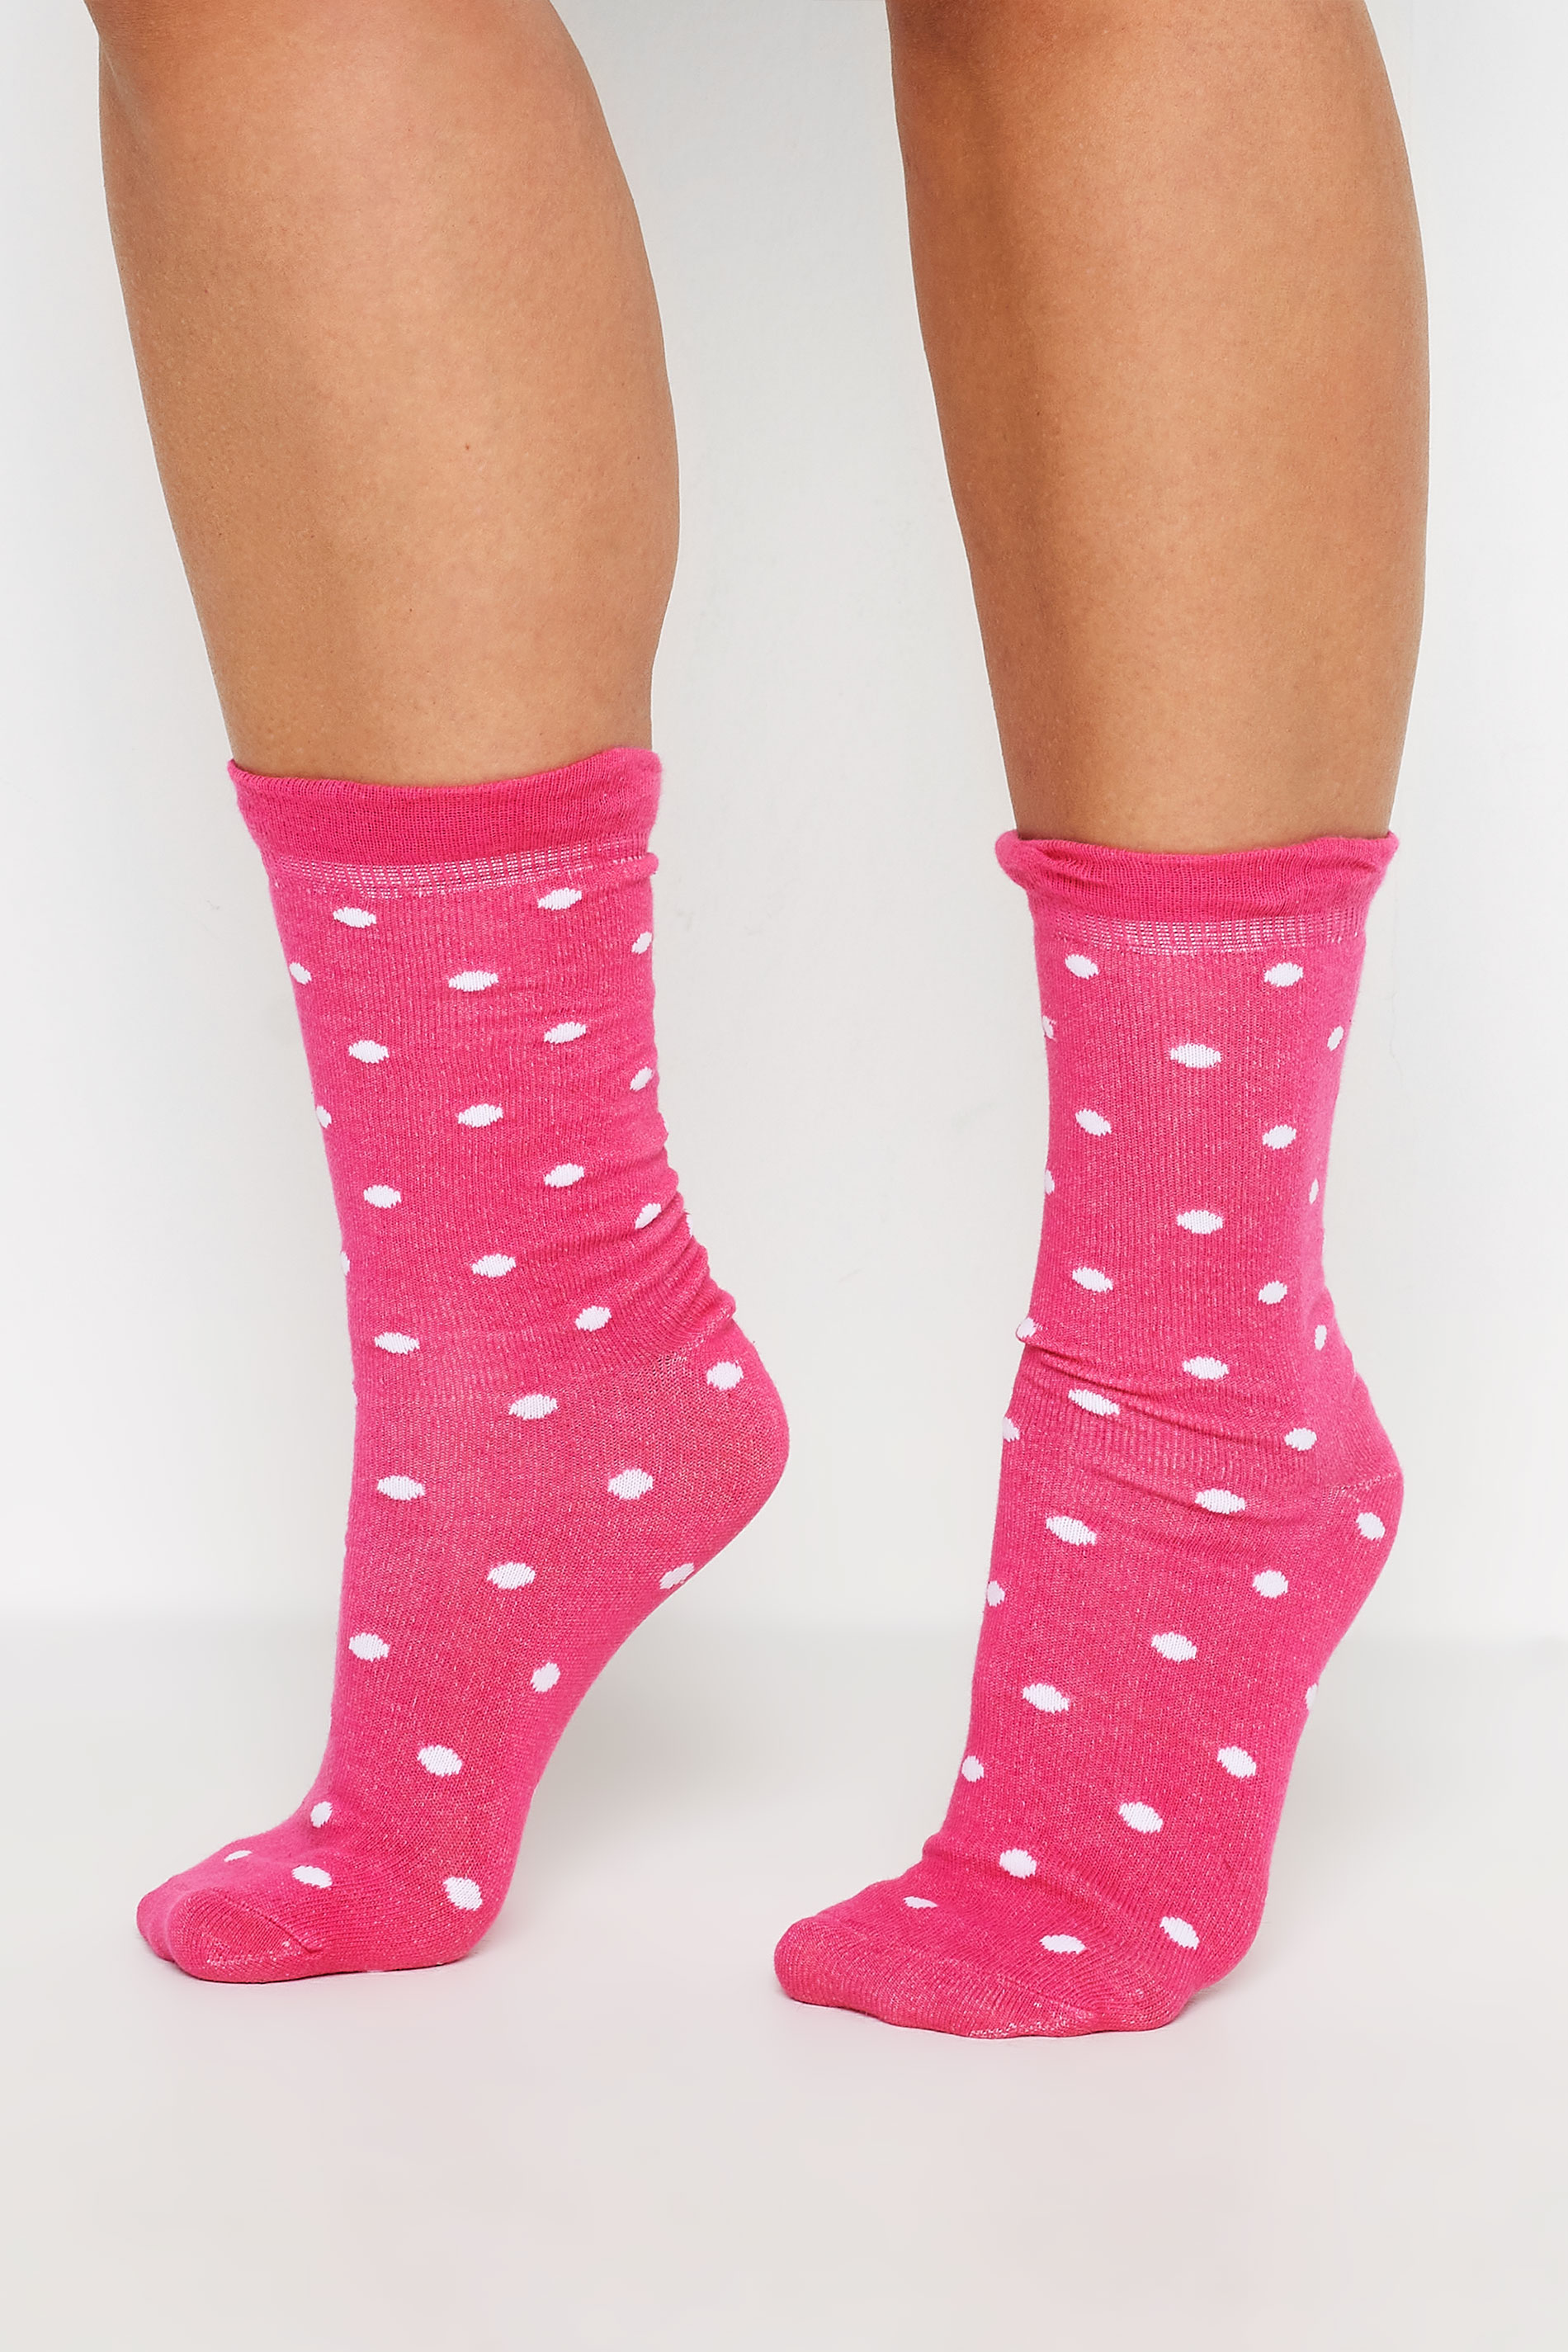 5 PACK Pink & Black Polka Dot Ankle Socks | Yours Clothing 2